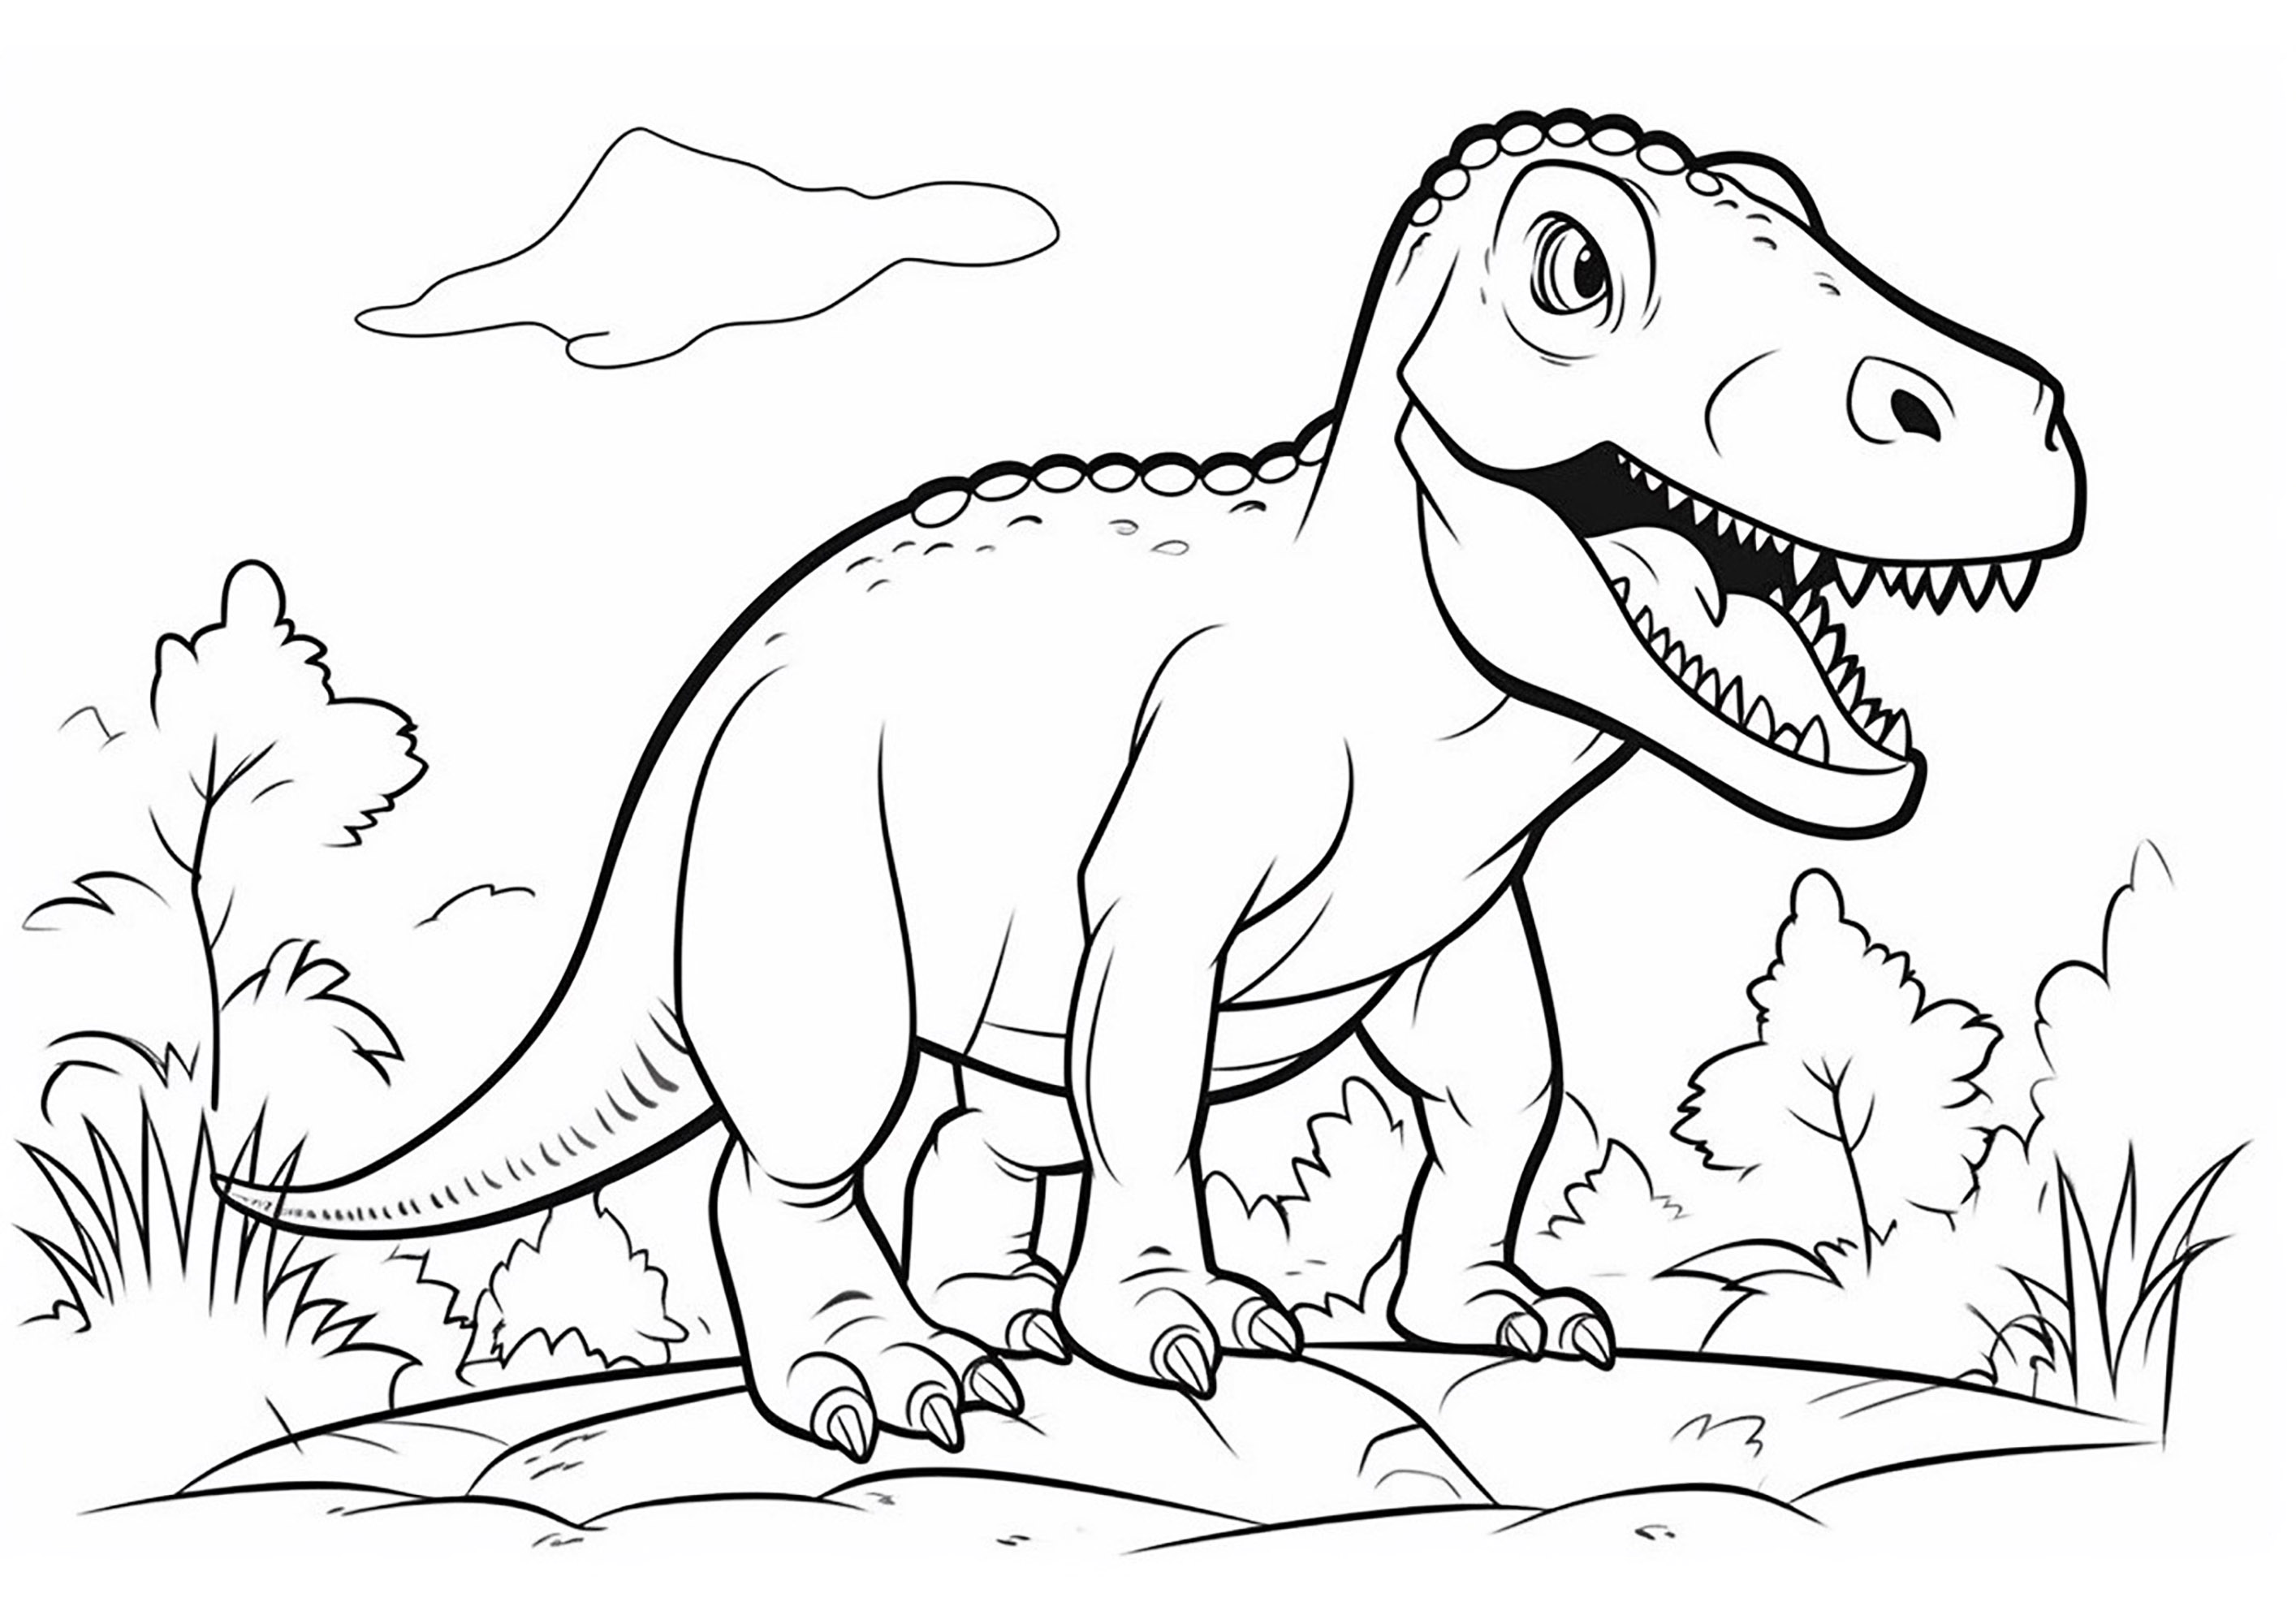 Tyrannosaure simple. Simple coloriage d'un Tyrannosaure